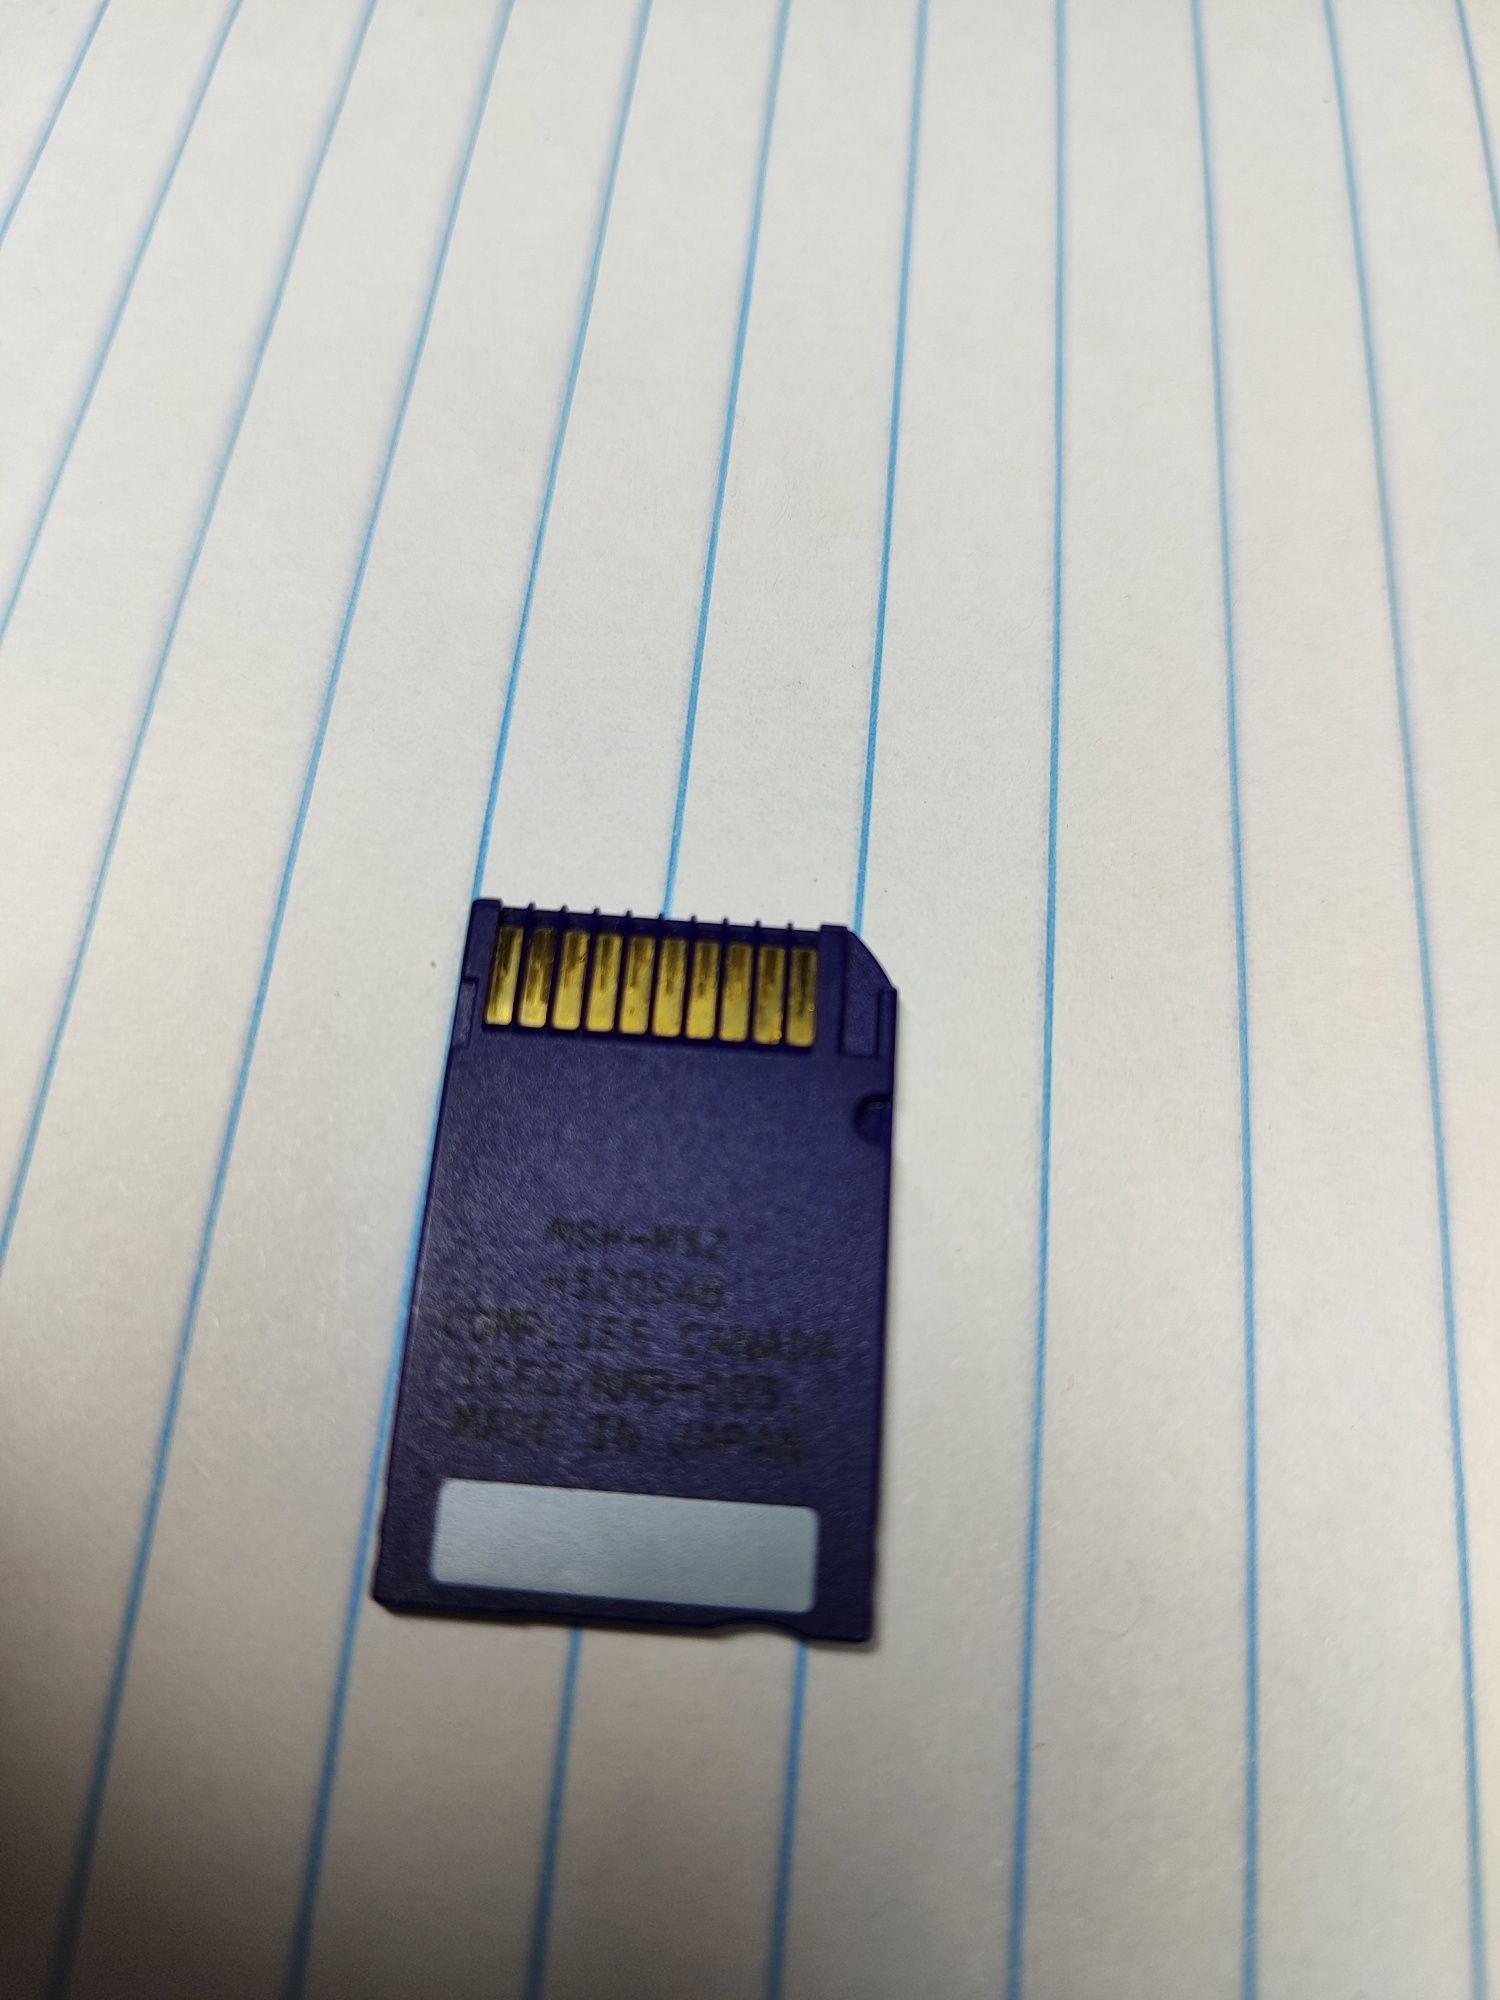 Karta Memory Stick Duo 32MB Sony Japan